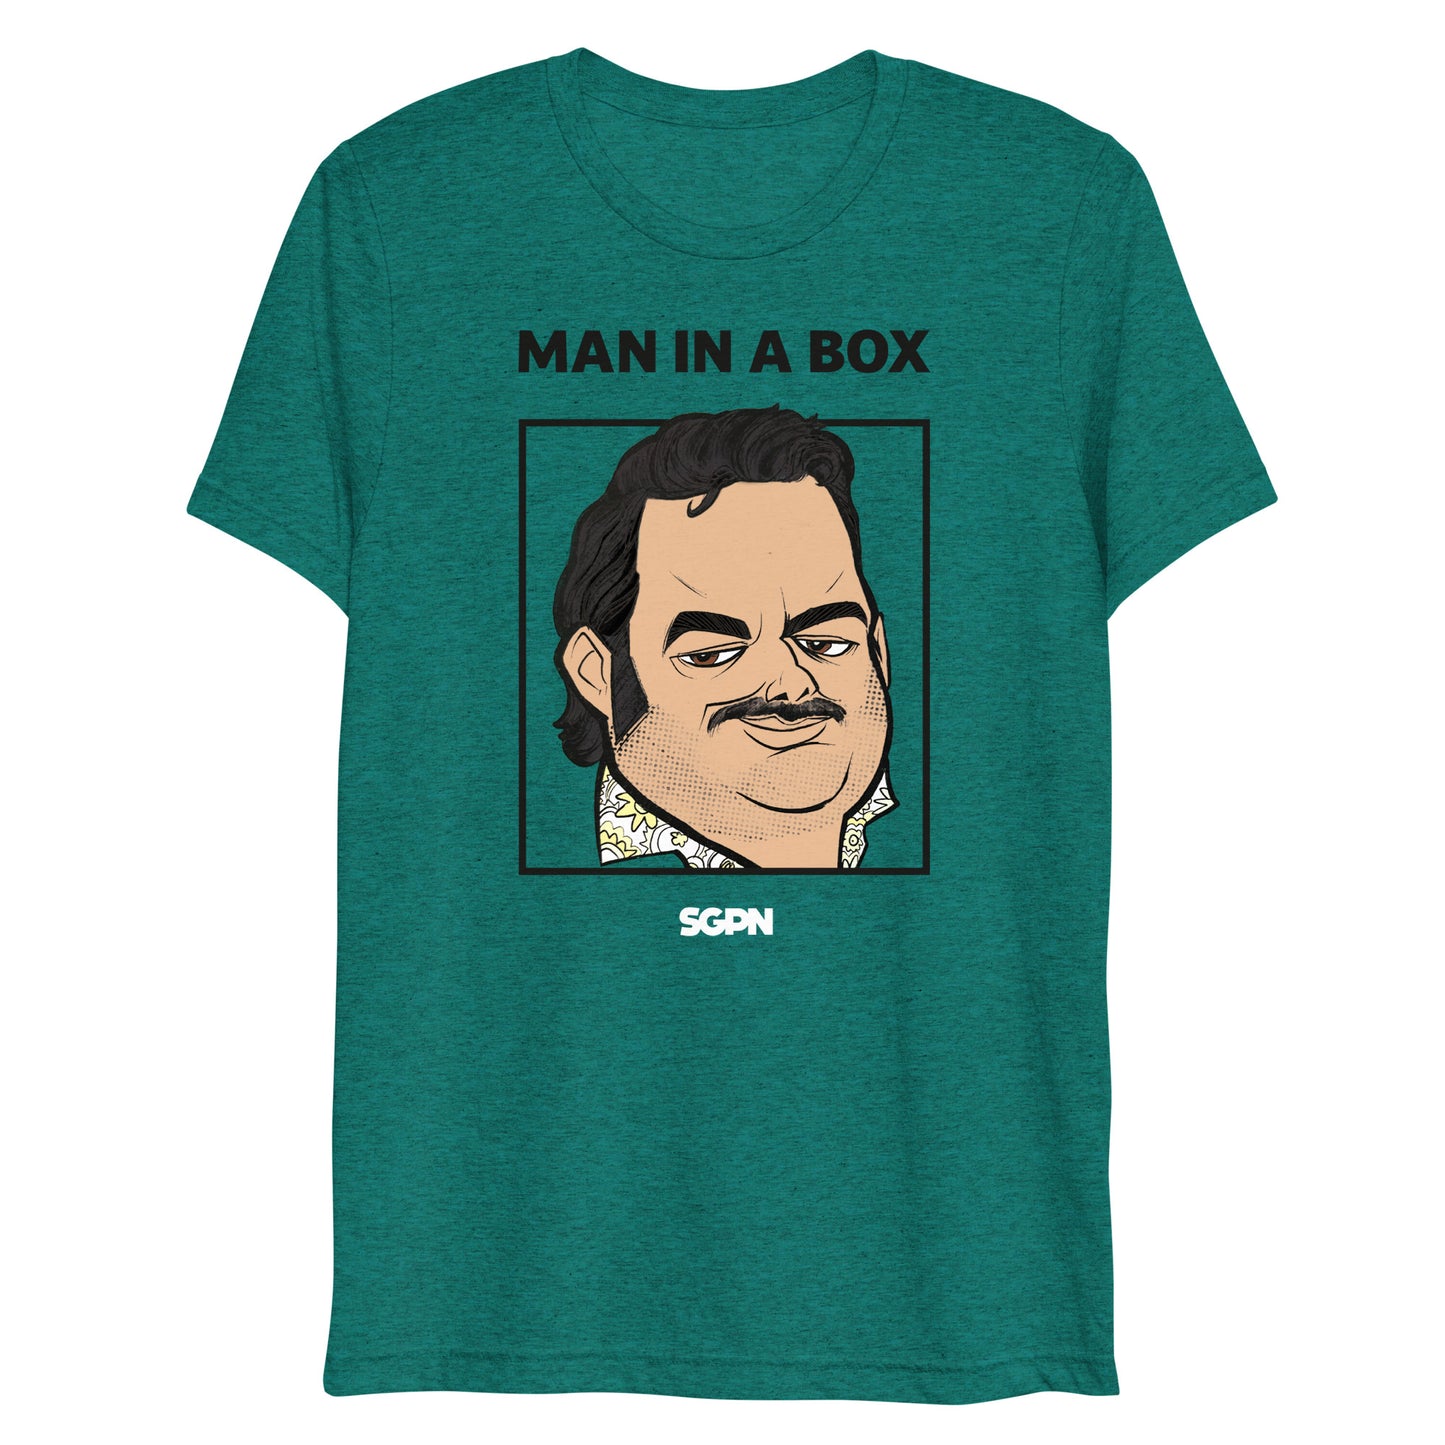 Man in a Box - Short sleeve t-shirt